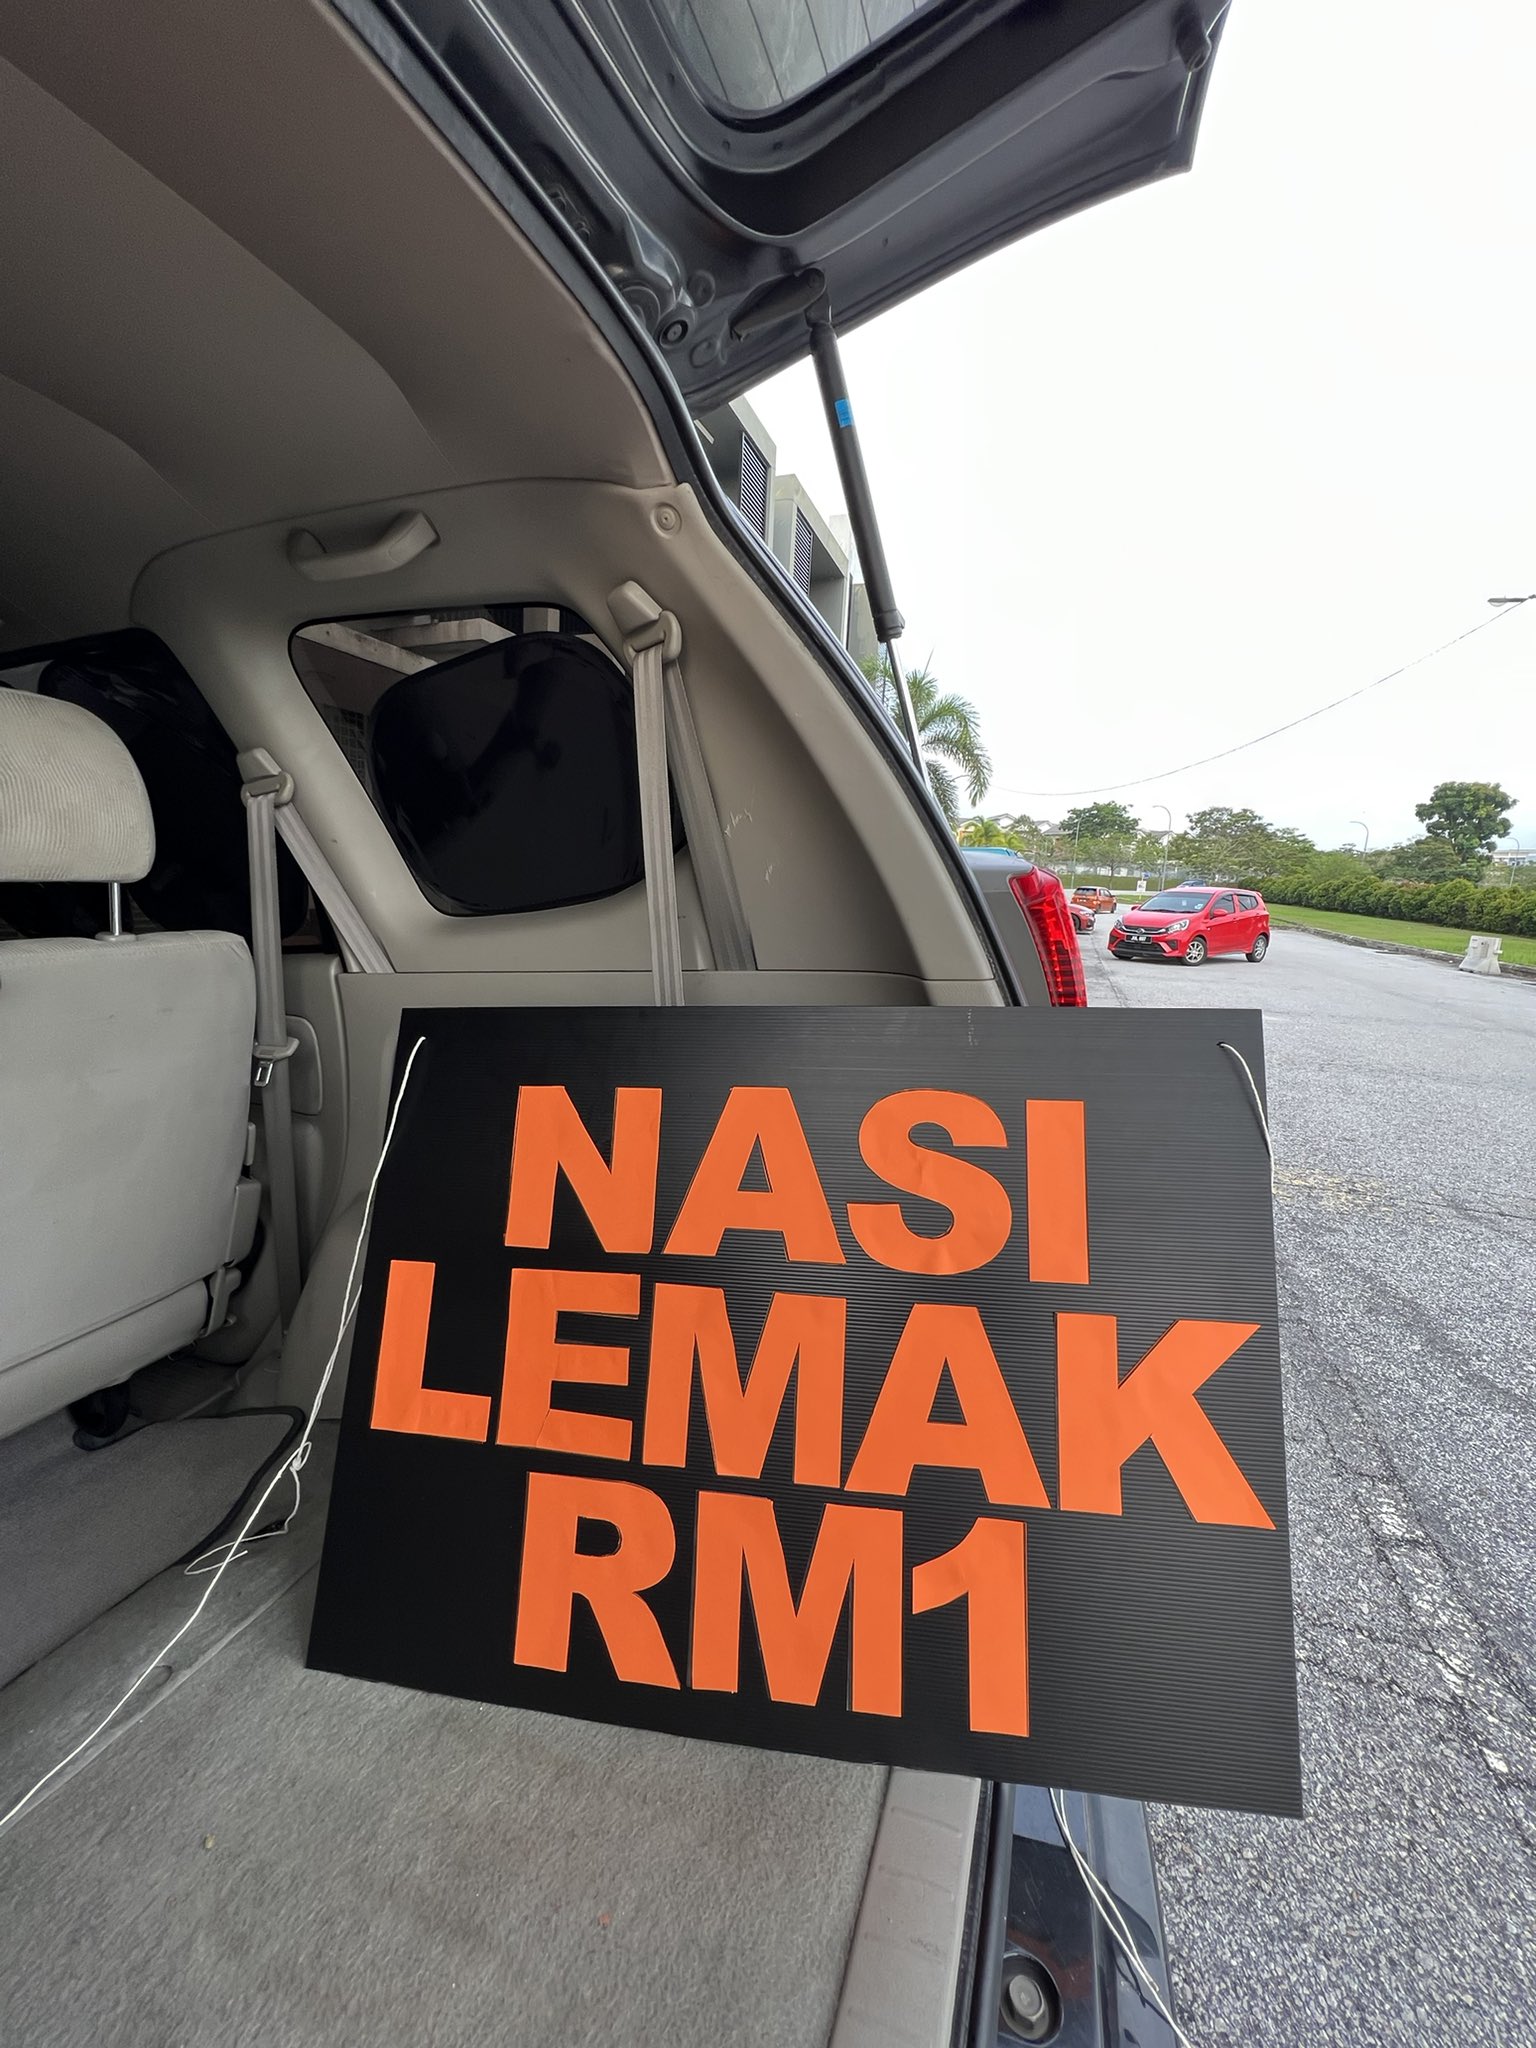 Fazrie runs a business selling RM1 packets of nasi lemak. Image credit: FazrieHaiqal_